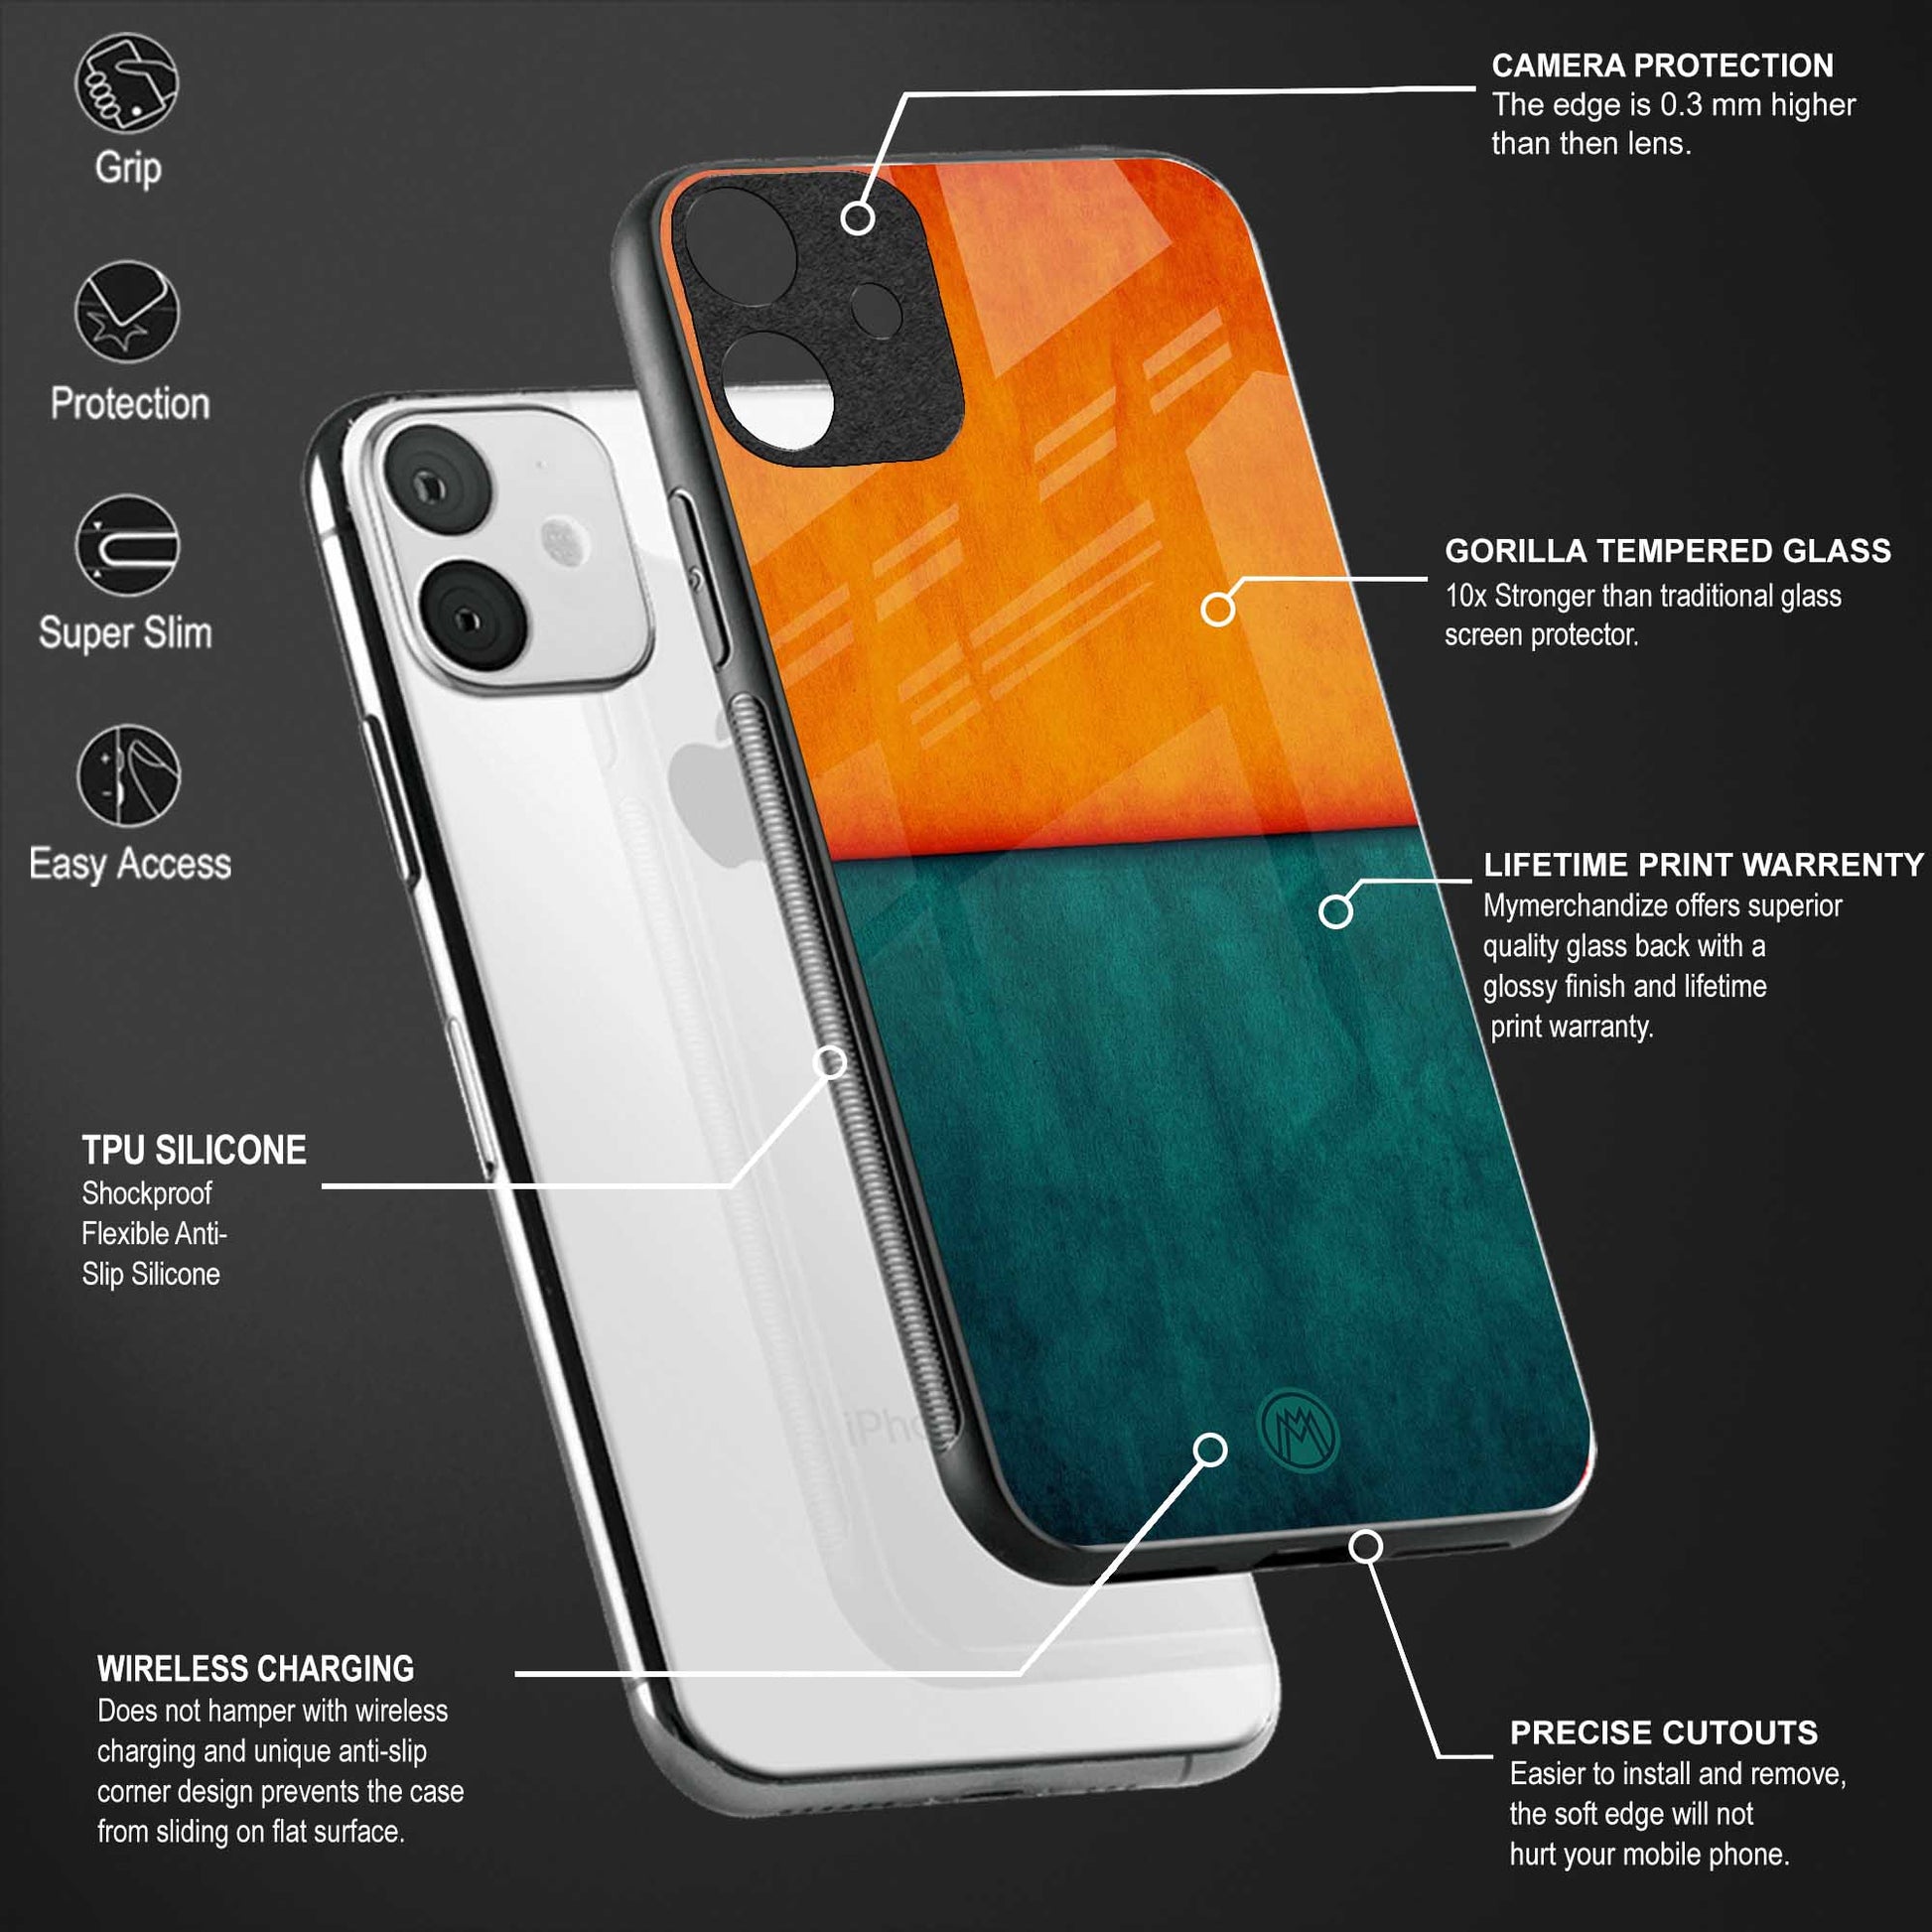 orange green back phone cover | glass case for vivo y22